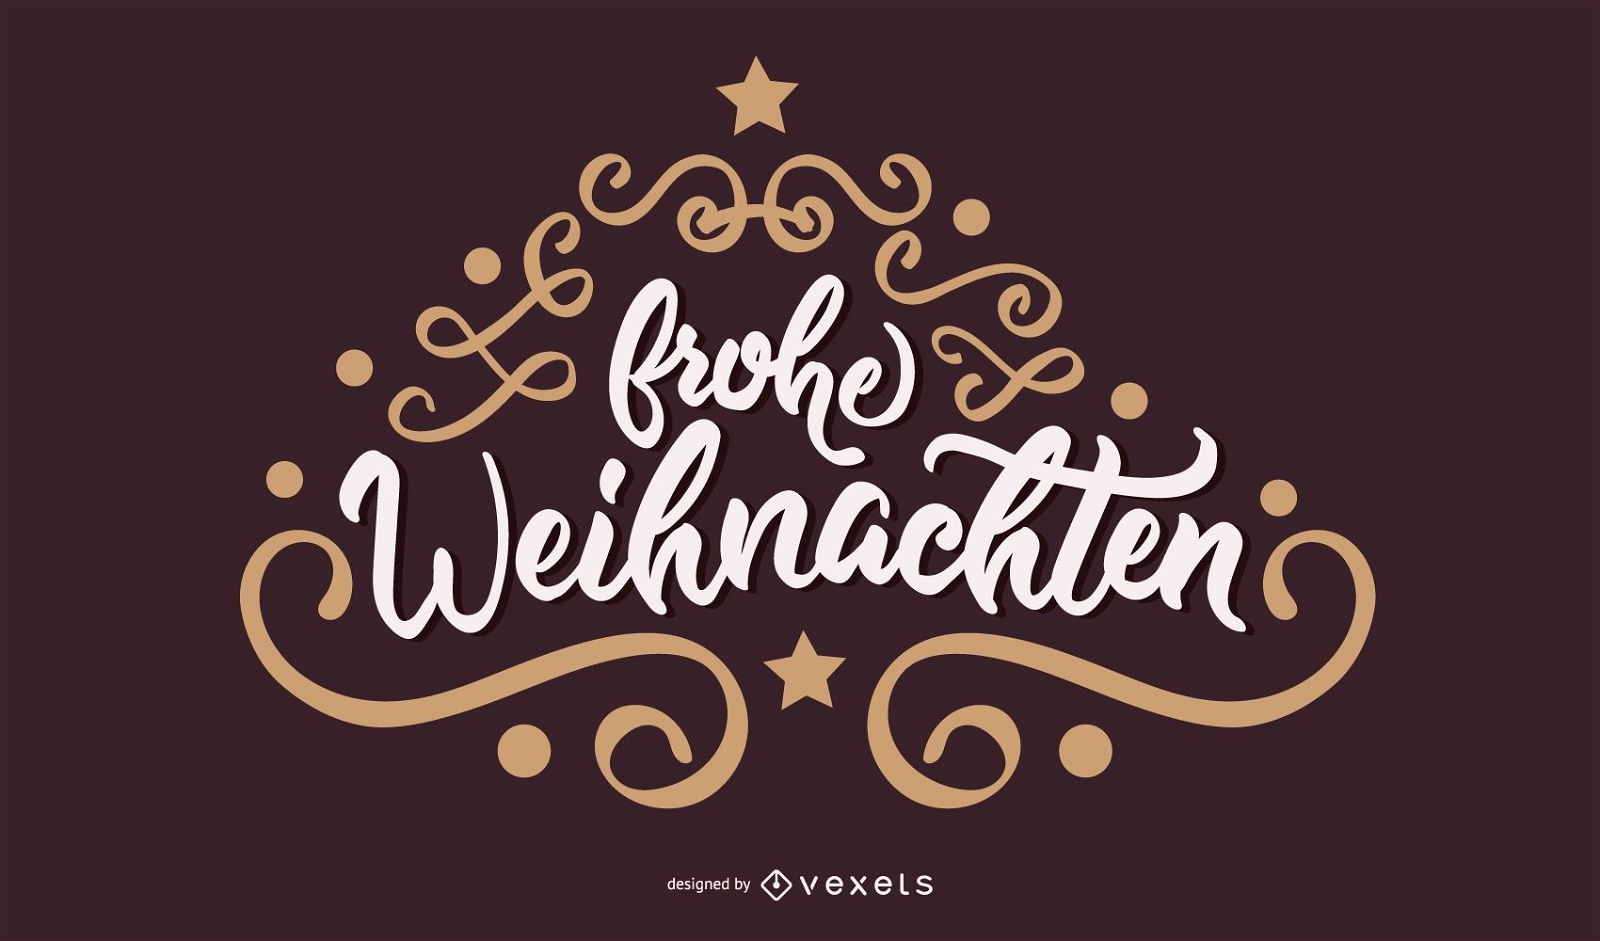 Banner de Navidad alemán Frohe Weihnachten